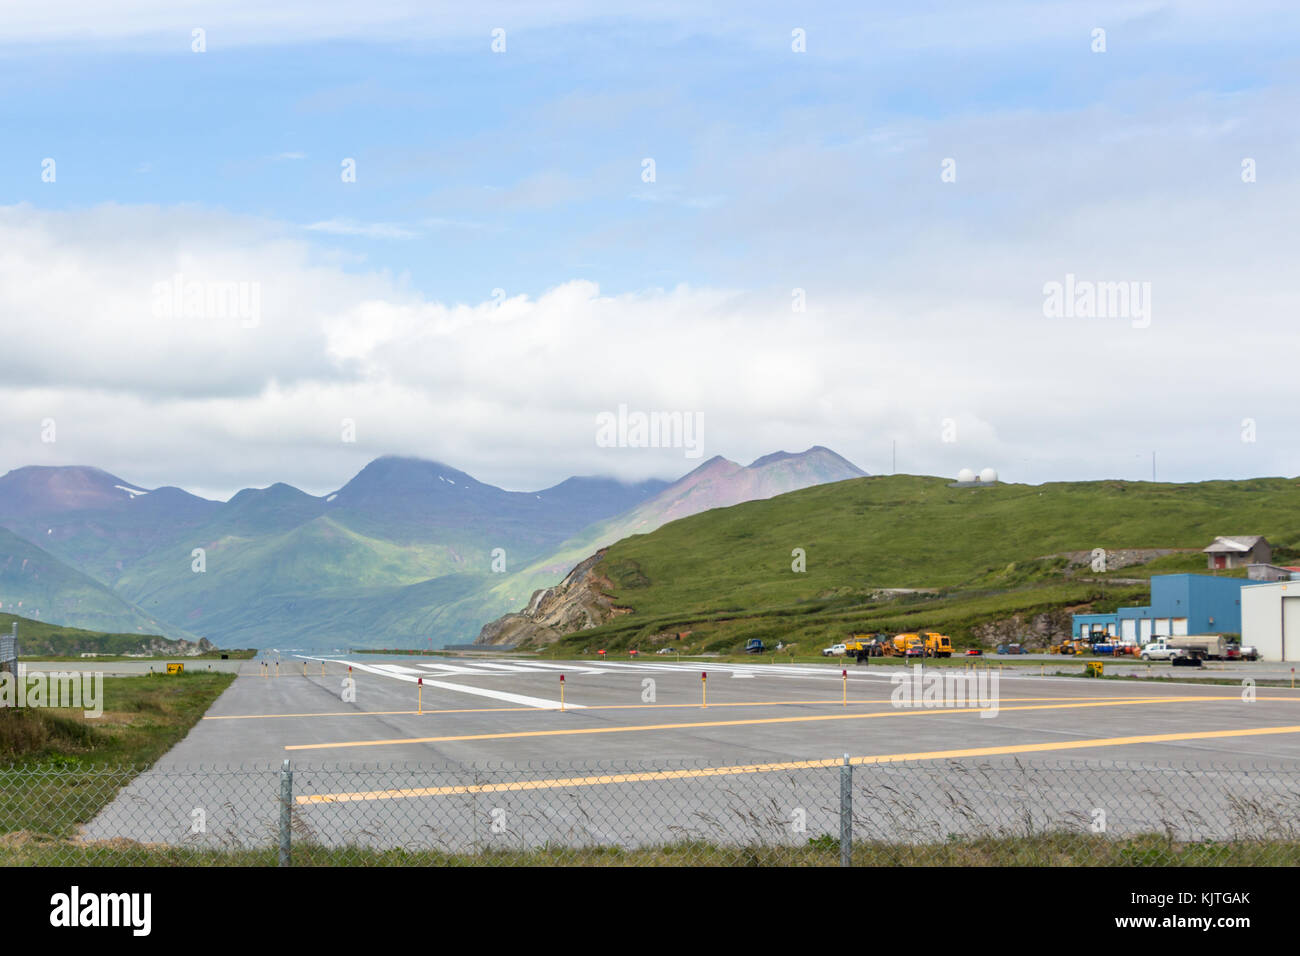 Dutch Harbor, Unalaska, Alaska, USA - August 14th, 2017: View of the runway of the Tom Masden Airport, Dutch Harbor, Unalaska, Alaska. Stock Photo